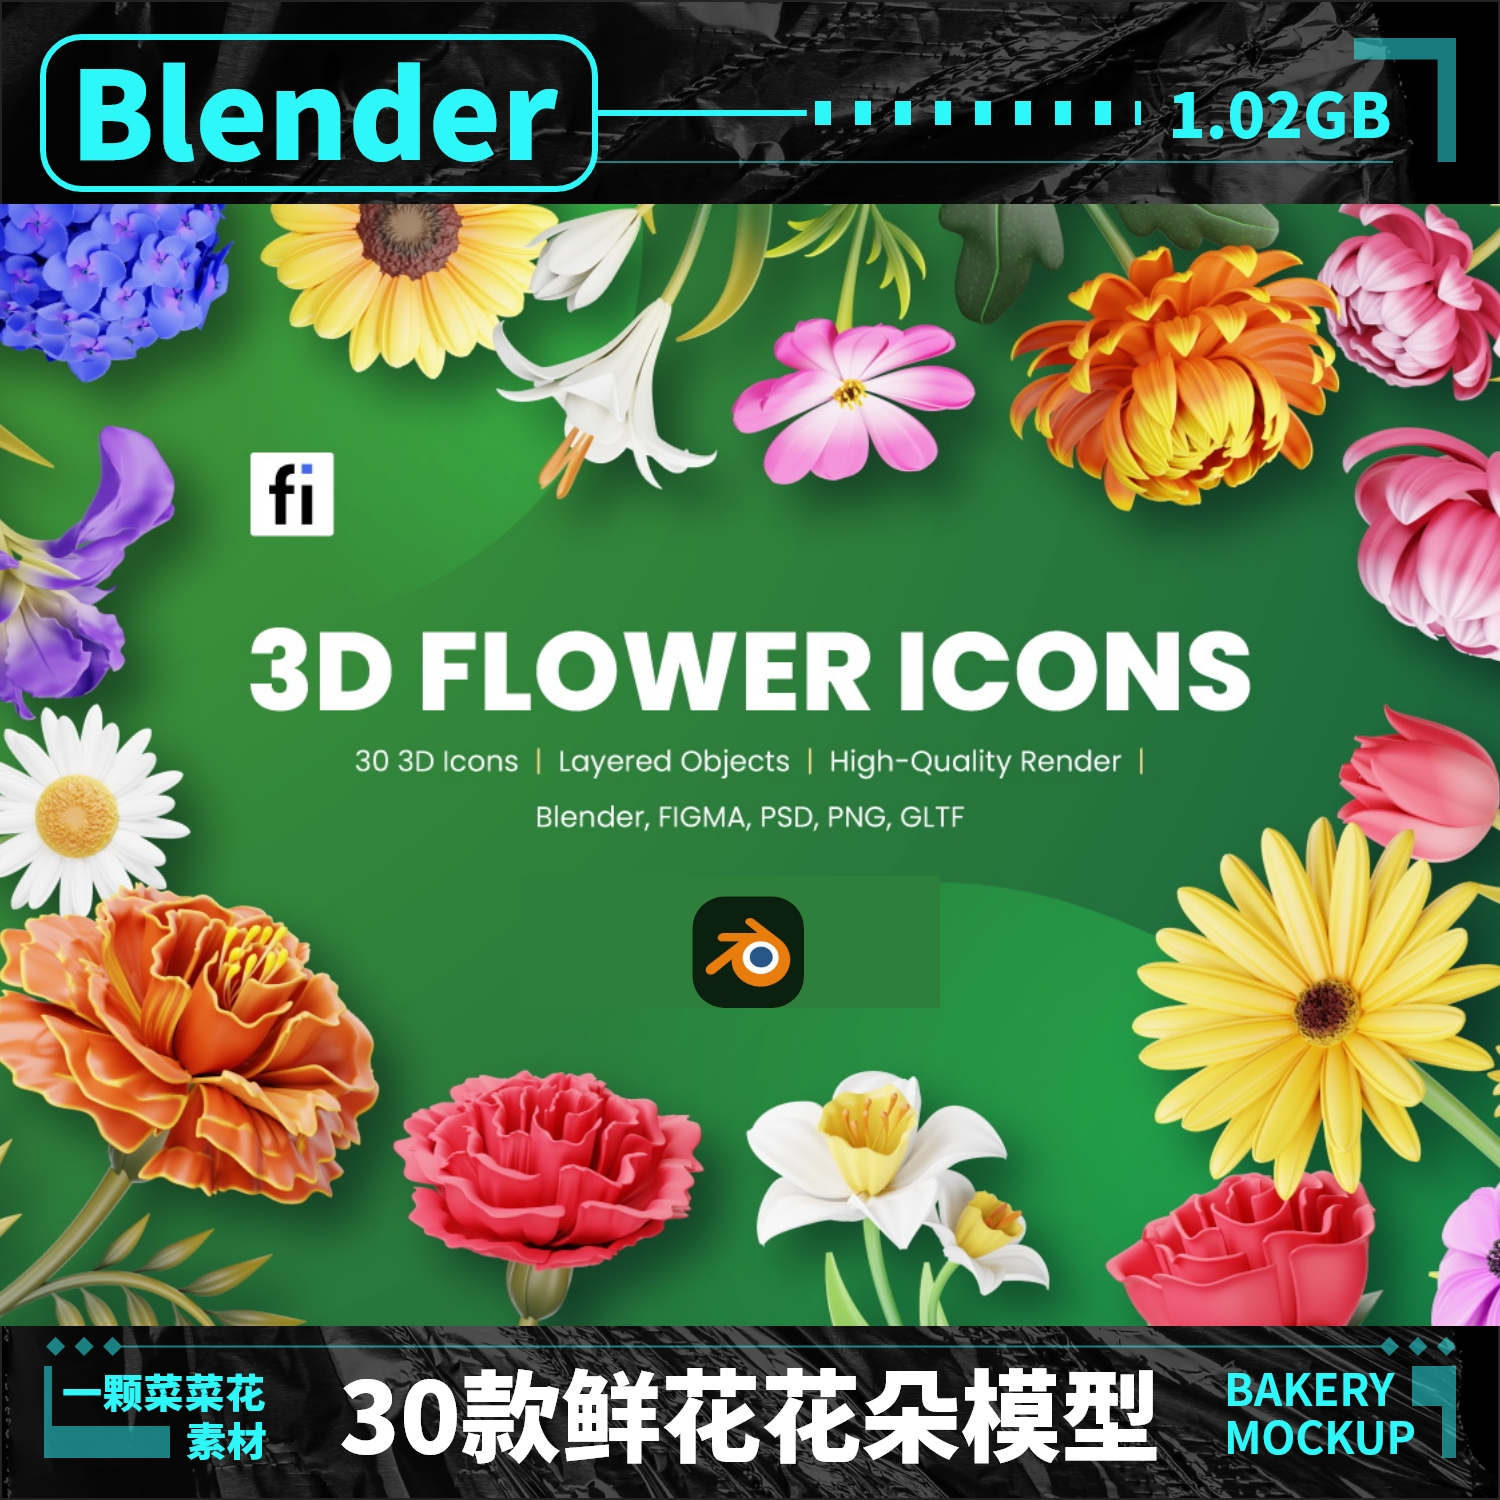 blender鲜花模型花朵植物花束素材荷花玫瑰3D百合薰衣草菊花 A188